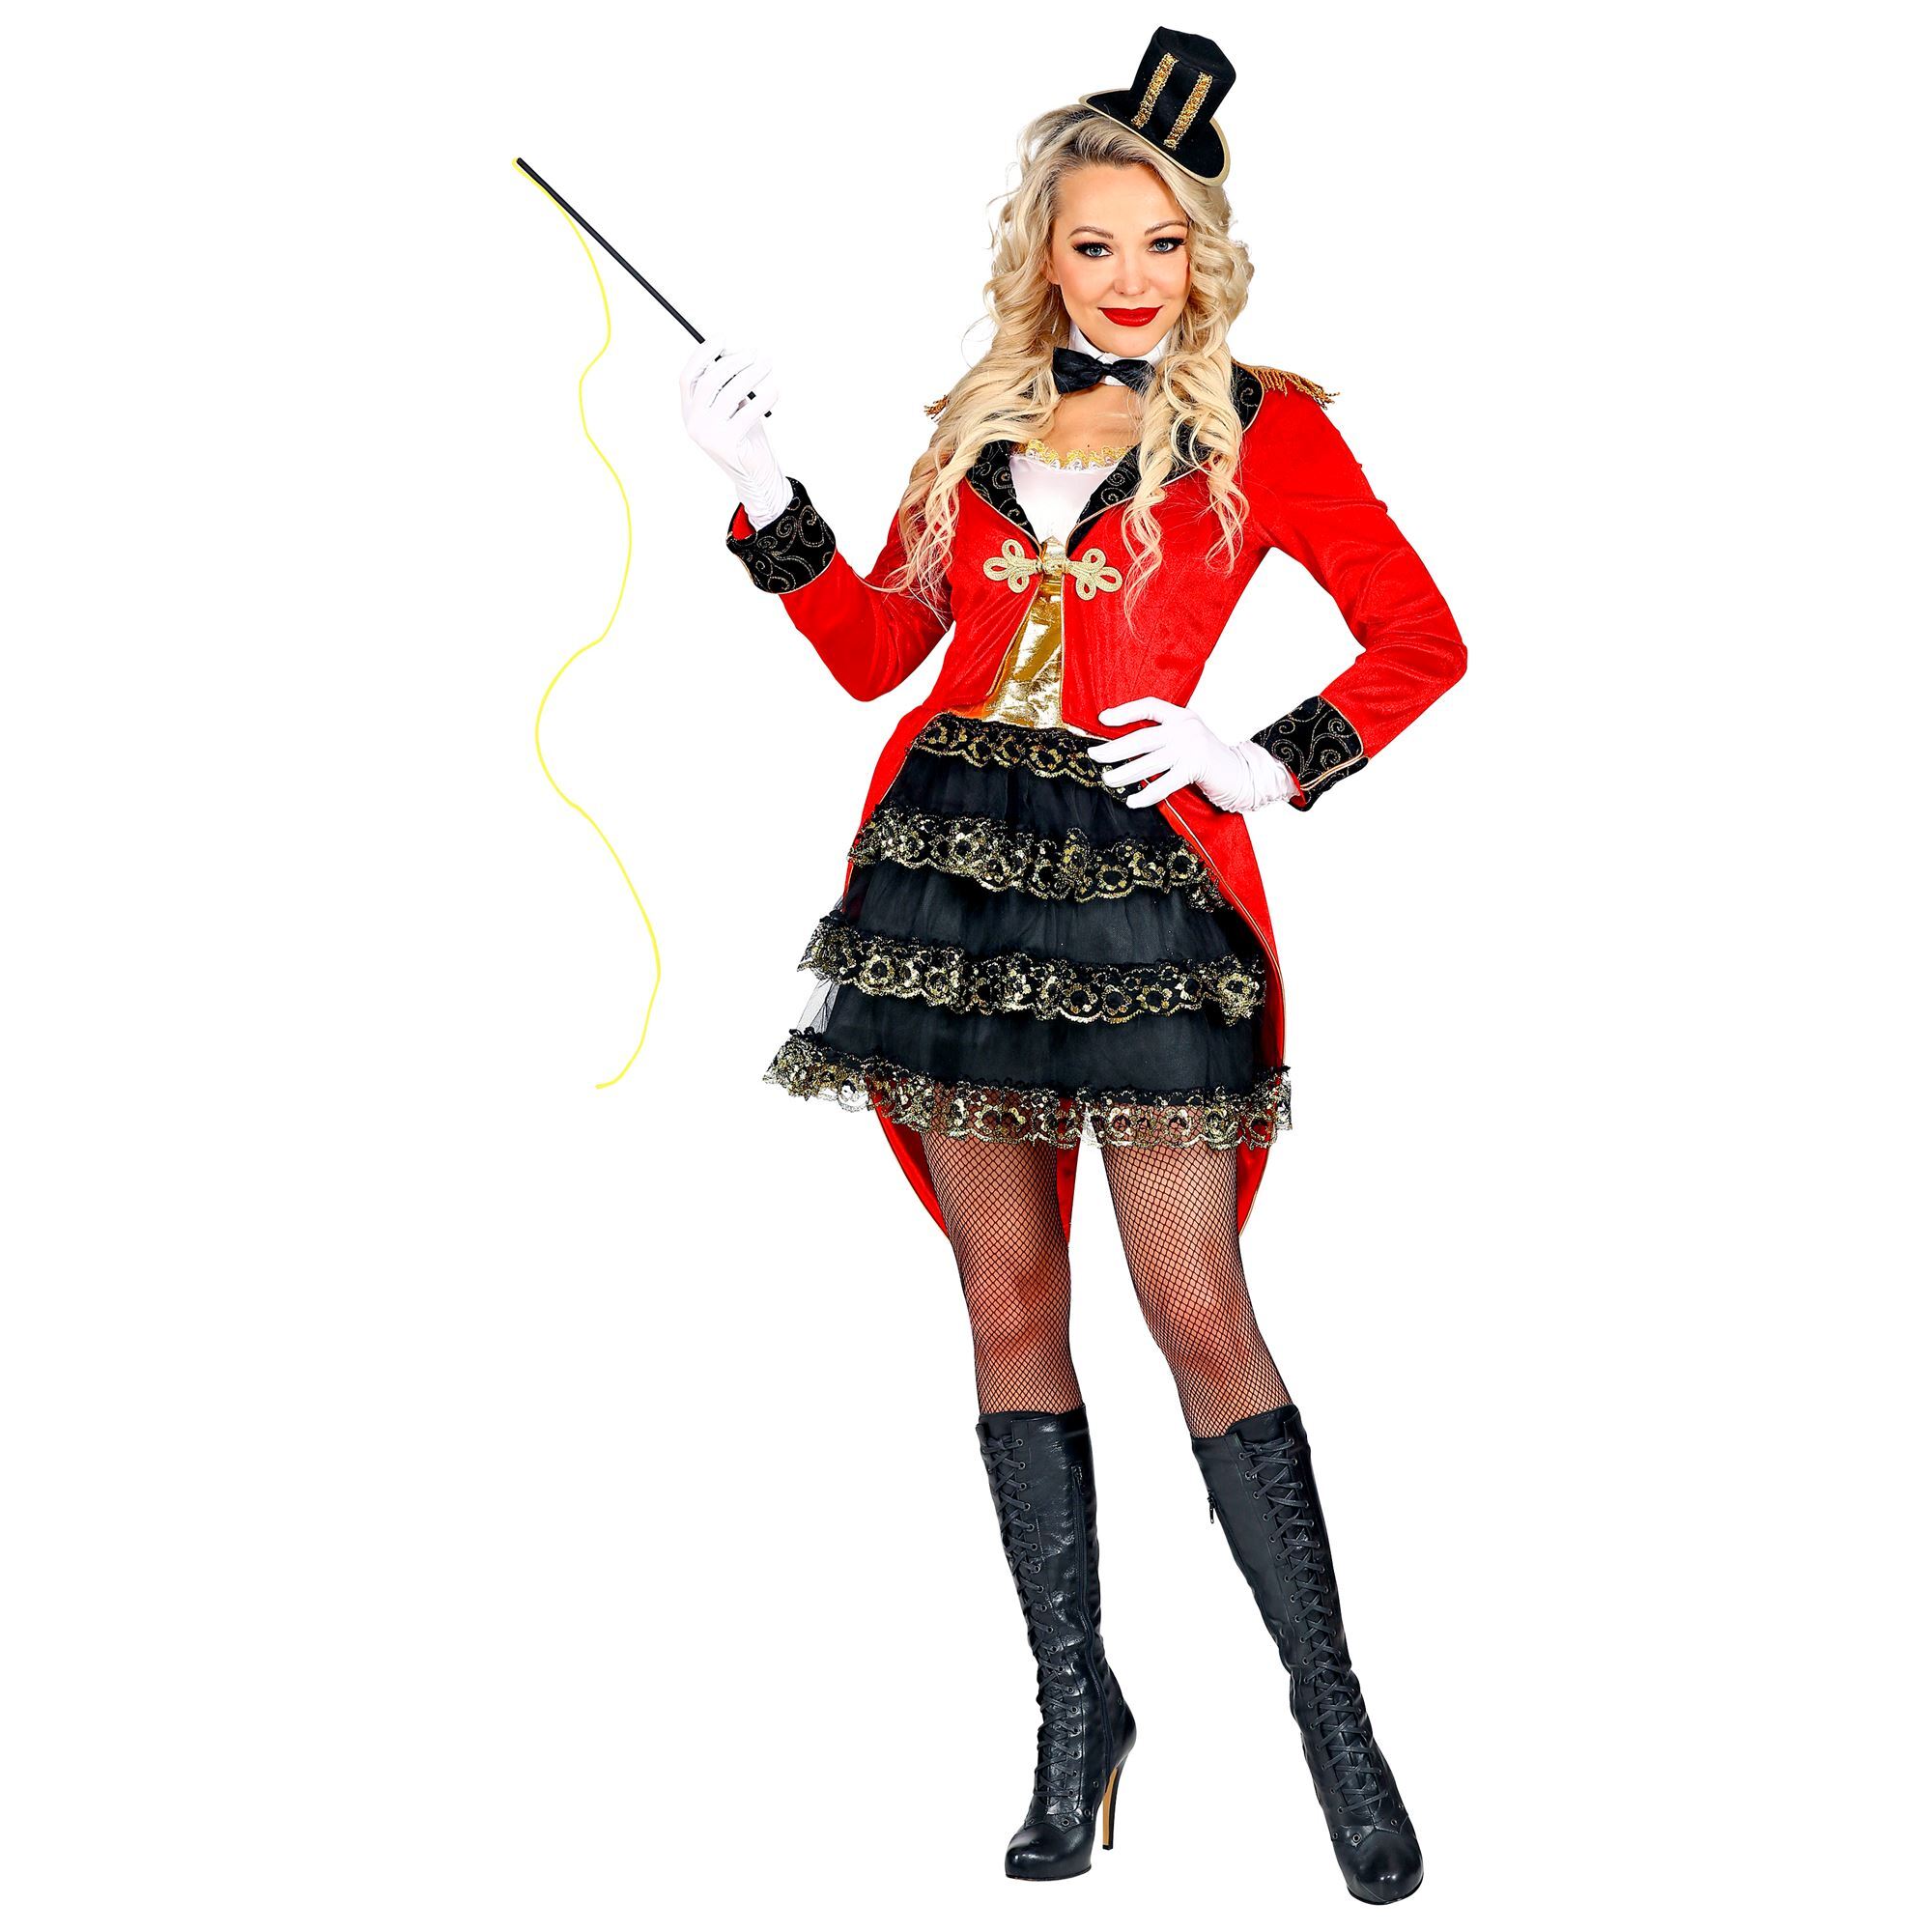 Circus dame van de piste kostuum parade outfit